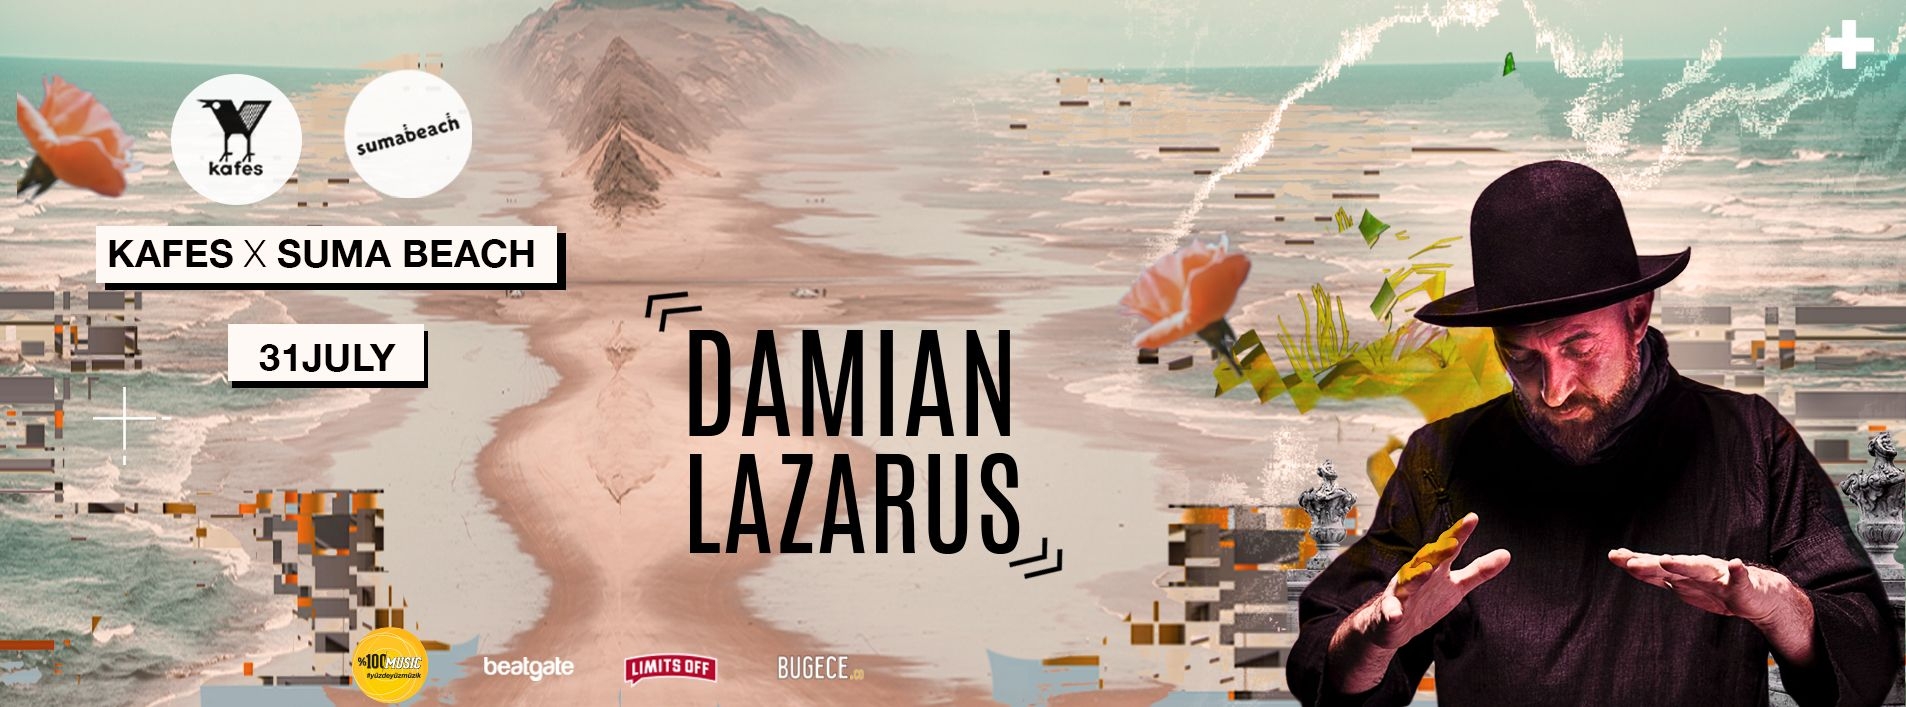 Damian Lazarus presented by Suma Beach & Kafes